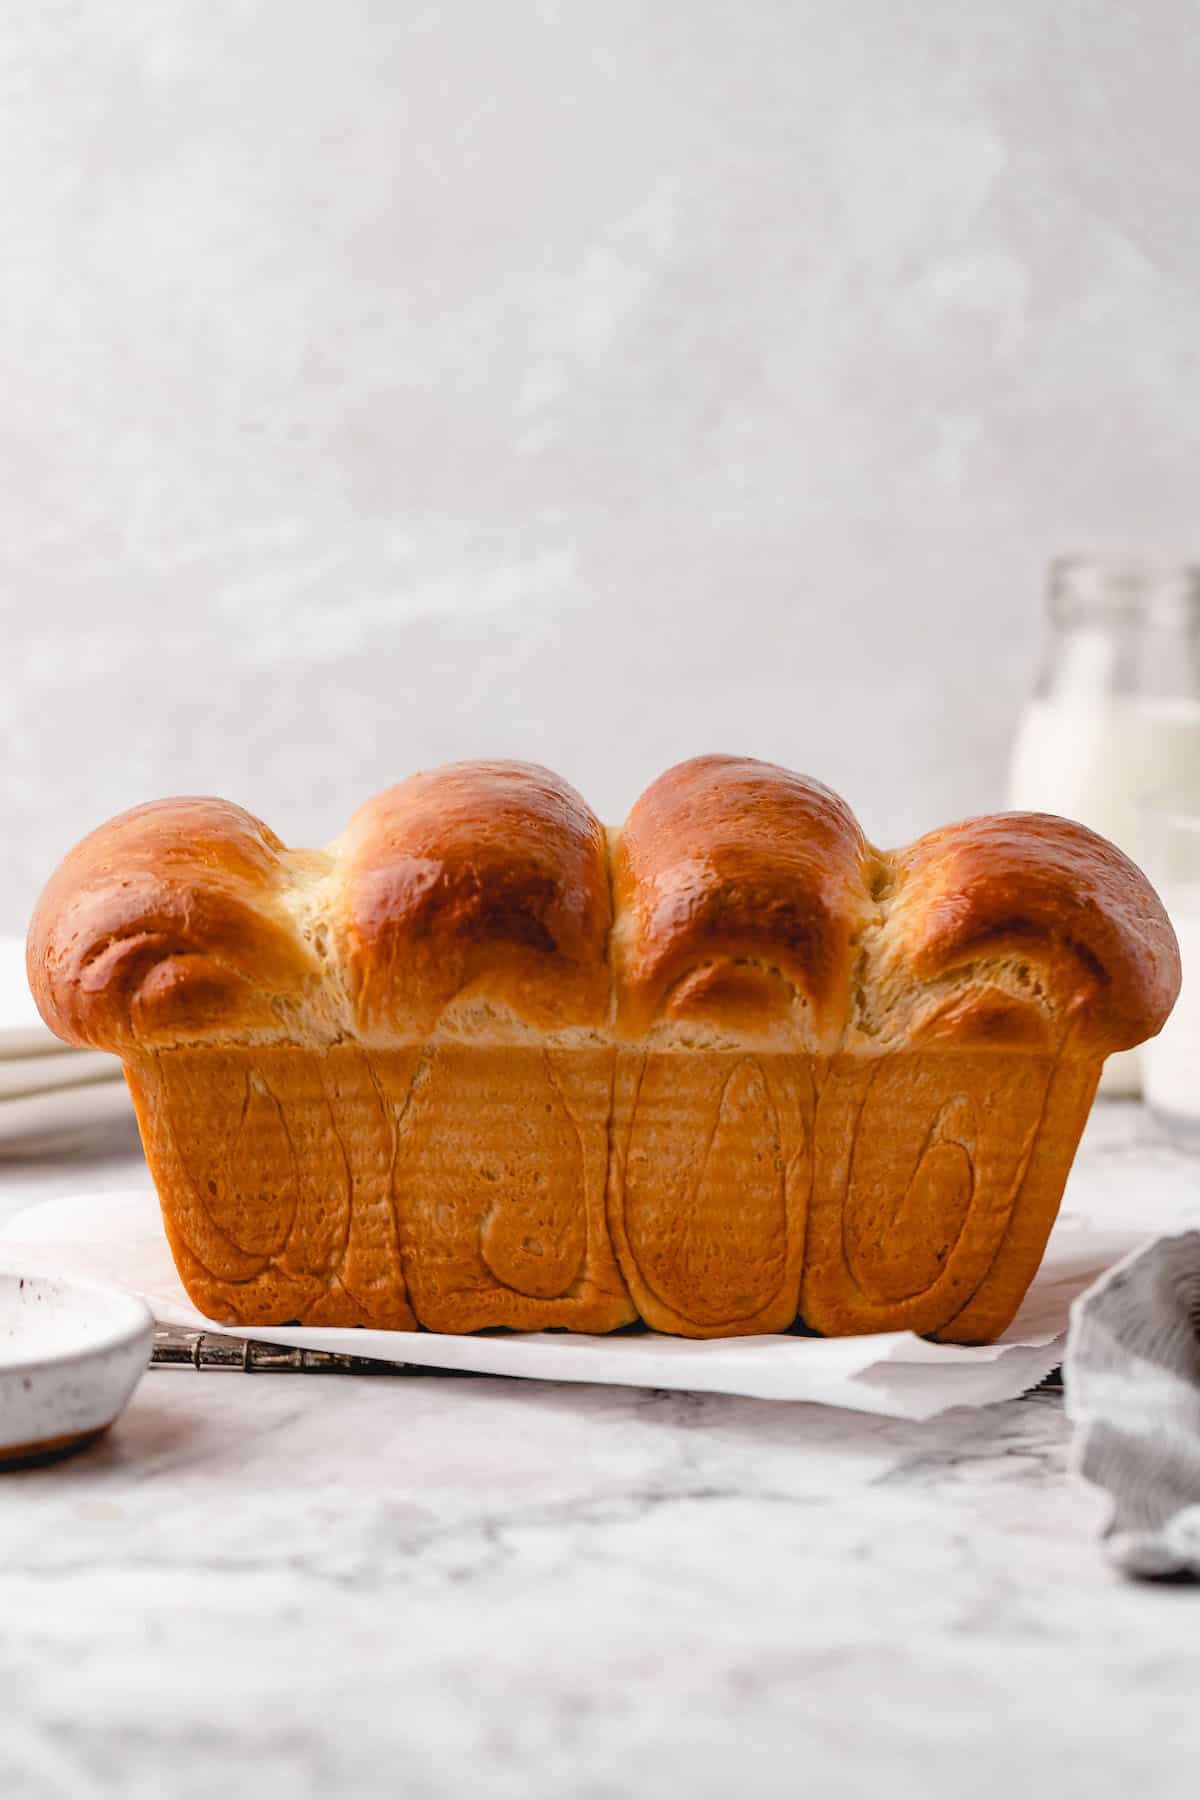 Side view of vegan milk bread, showing swirls of dough